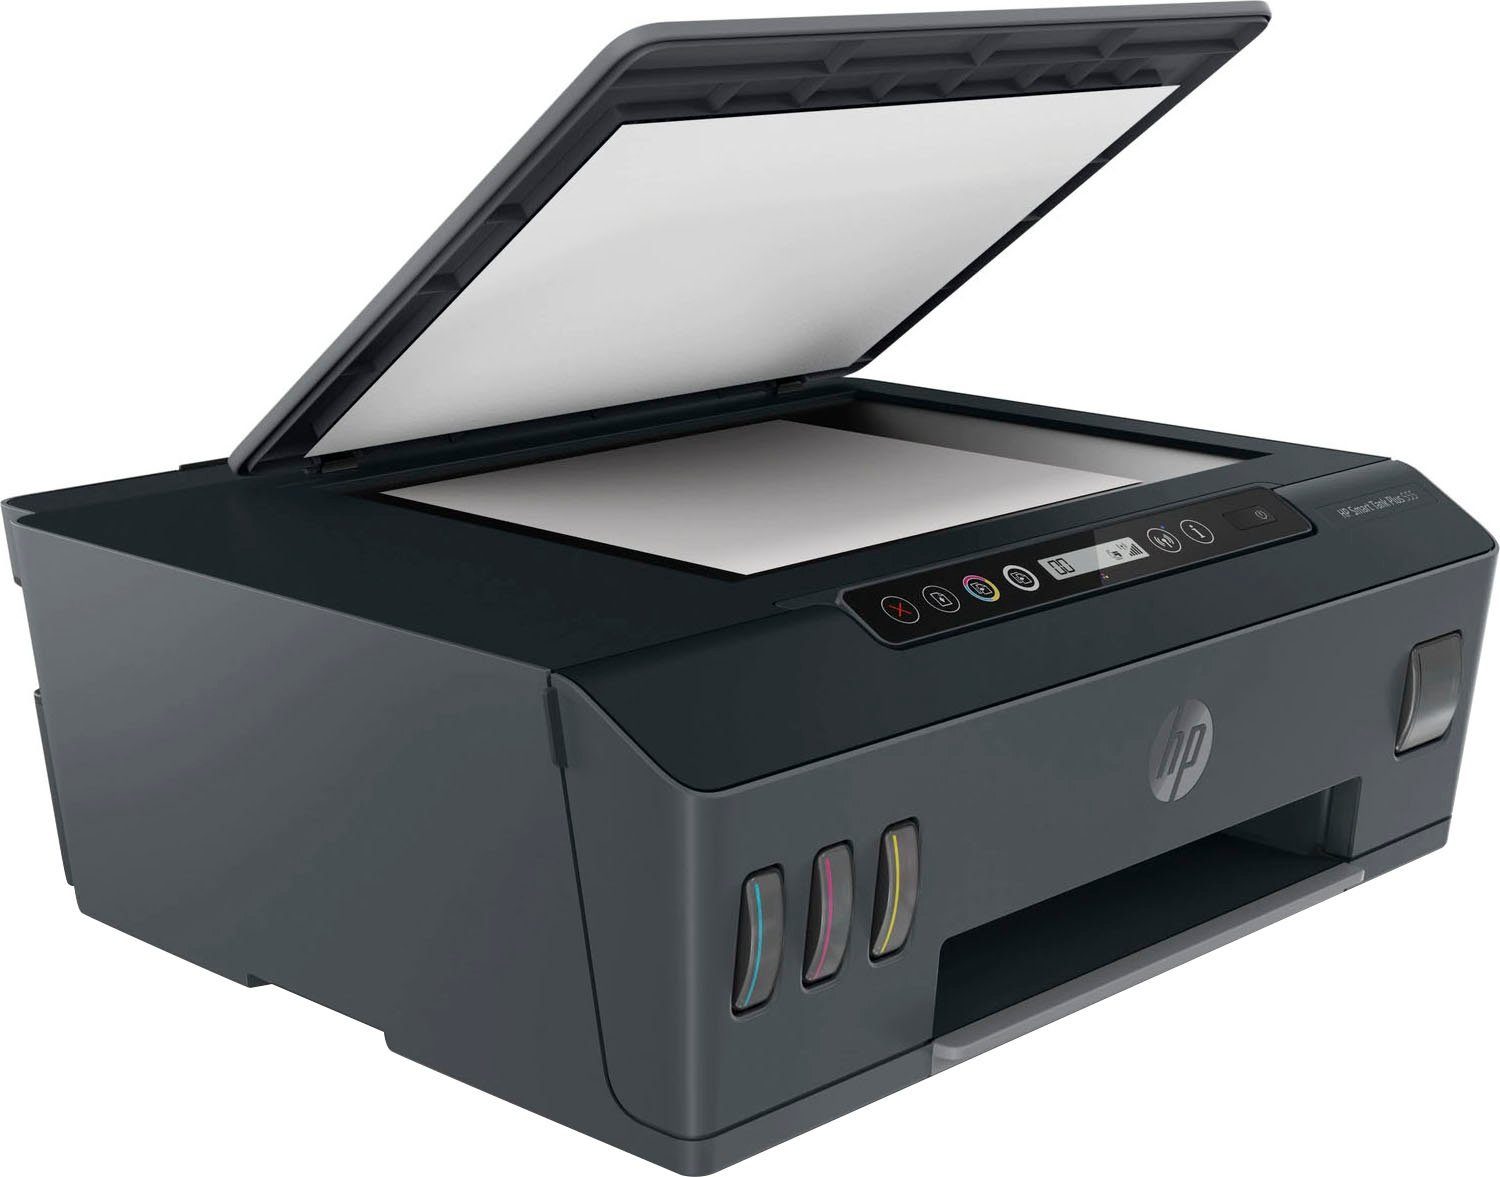 HP Smart Tank Plus 555 Direct, Instant kompatibel) HP+ (Bluetooth, Ink Multifunktionsdrucker, Wi-Fi